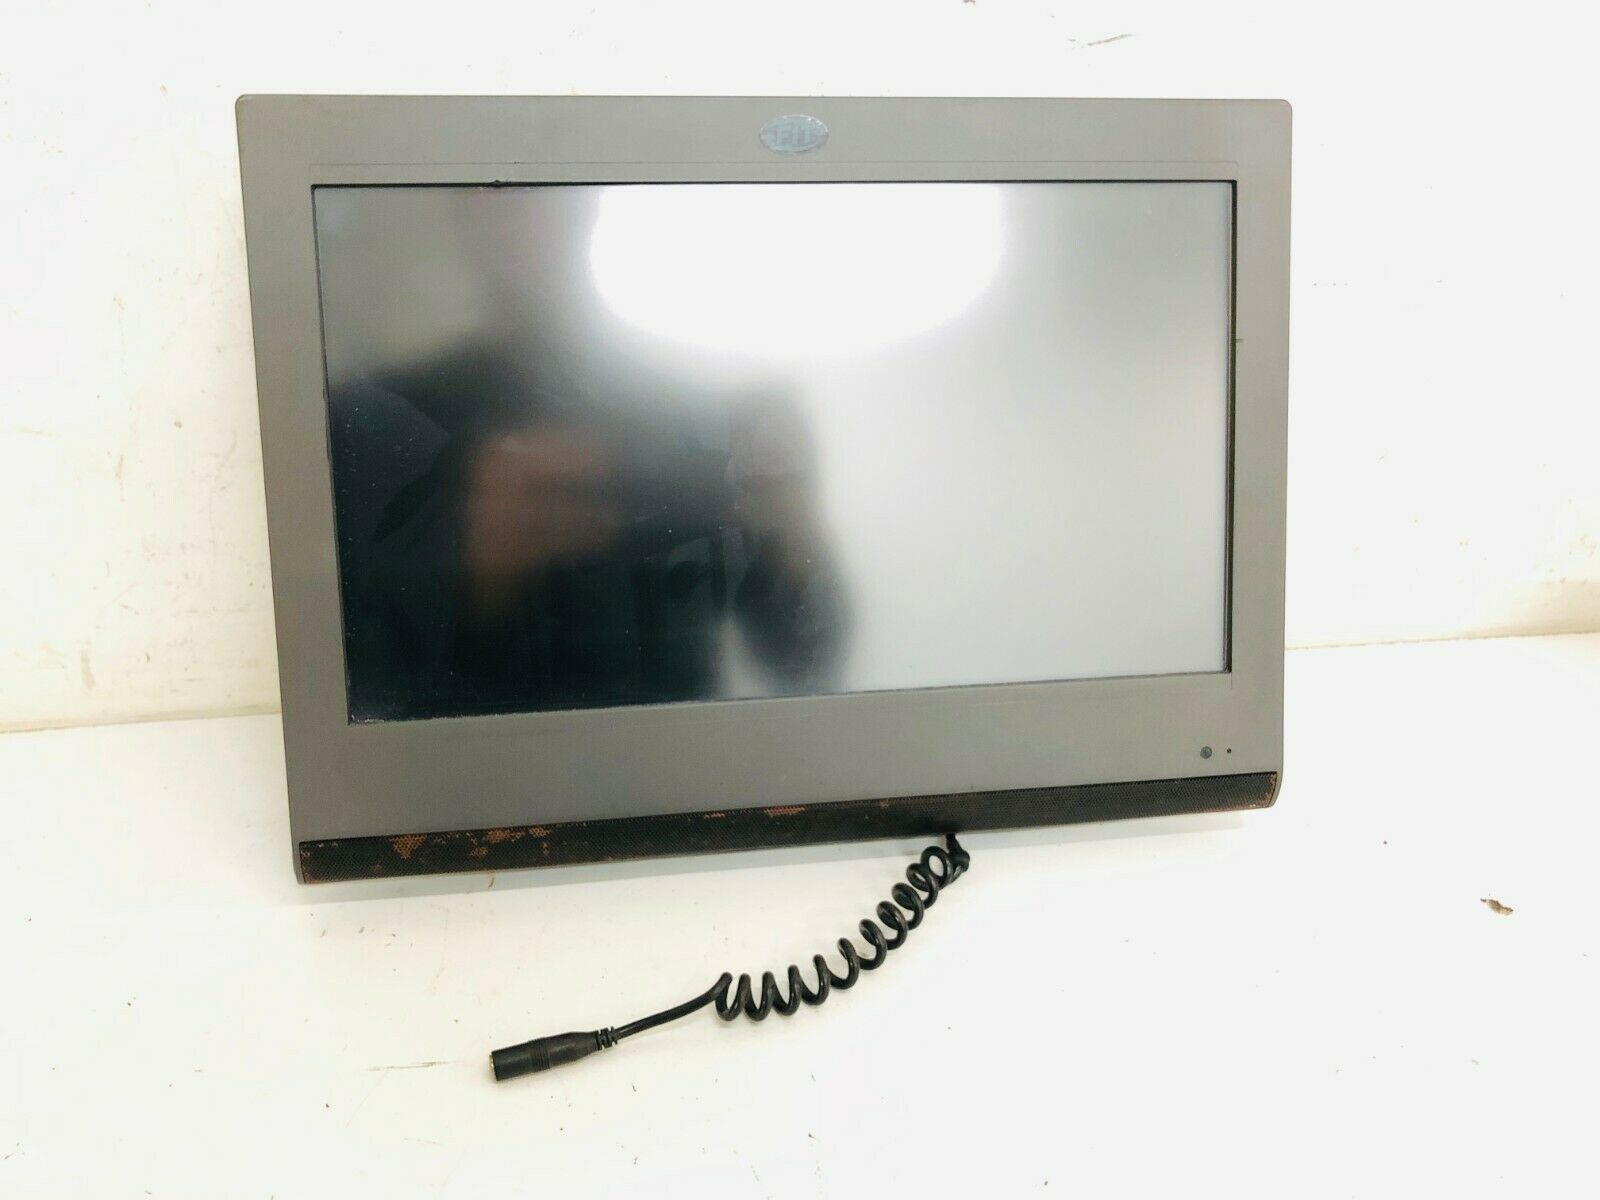 Precor EFX 823 Elliptical LCD PVS TV Monitor 15